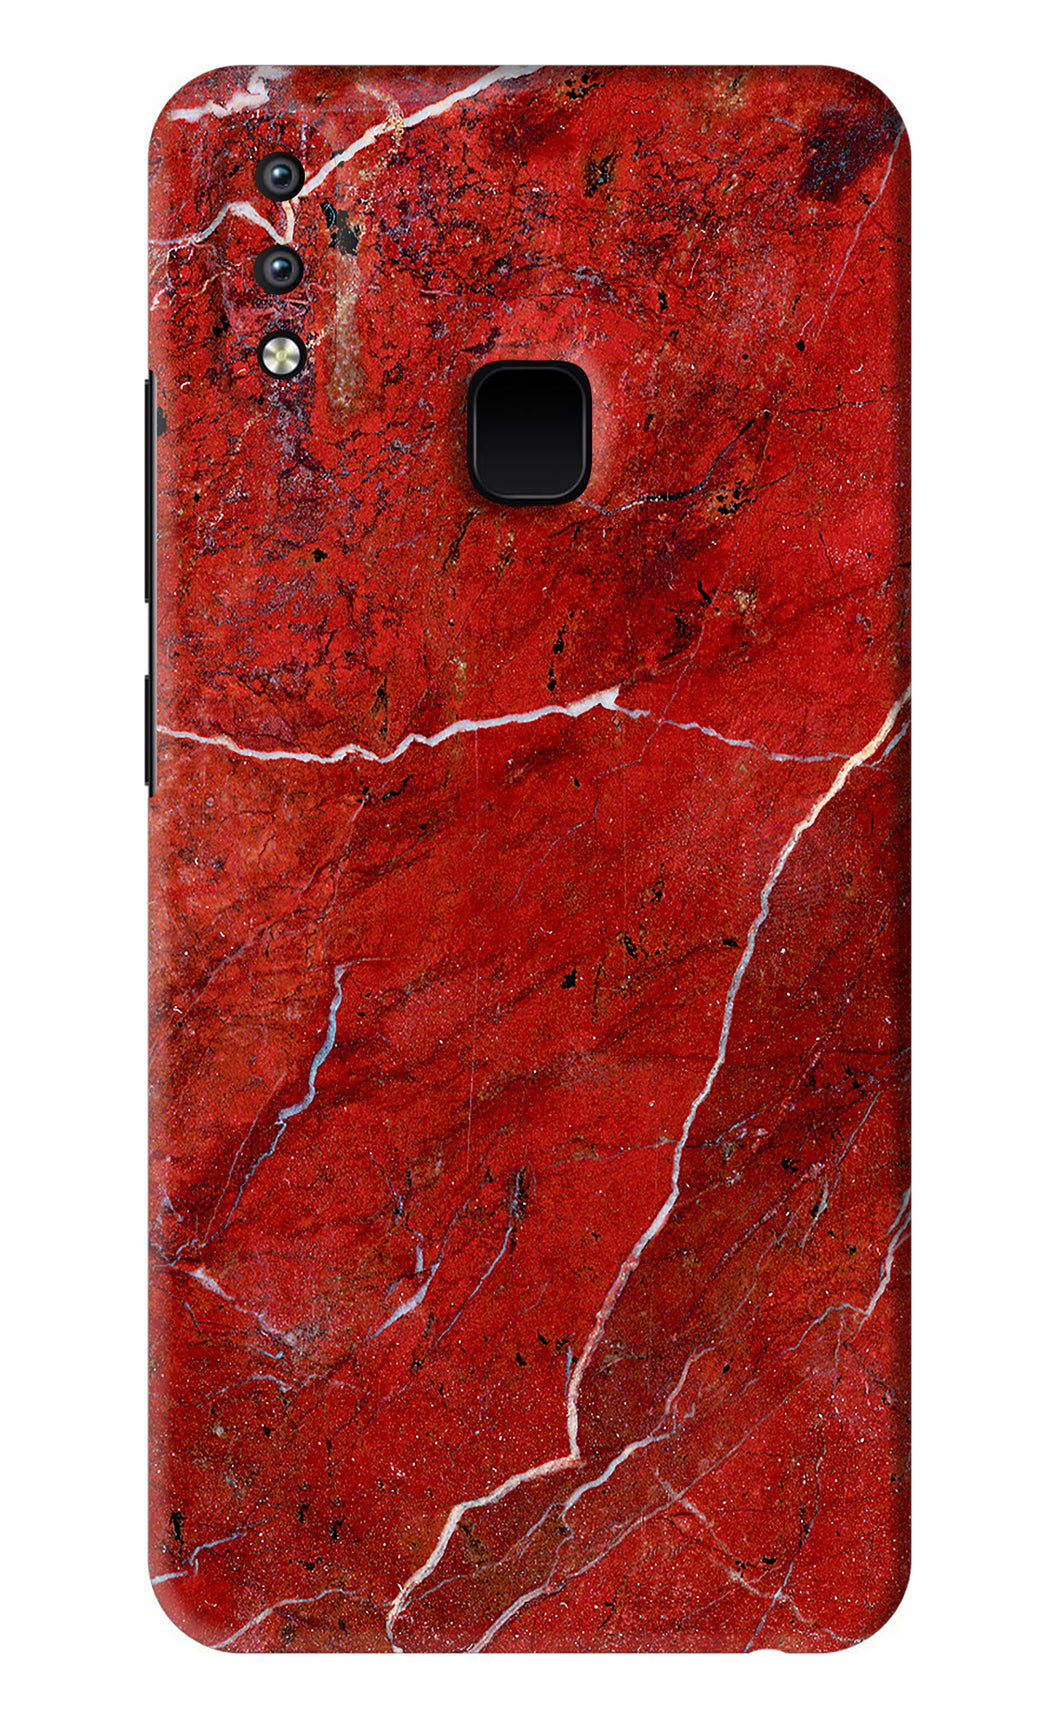 Red Marble Design Vivo Y93 Back Skin Wrap